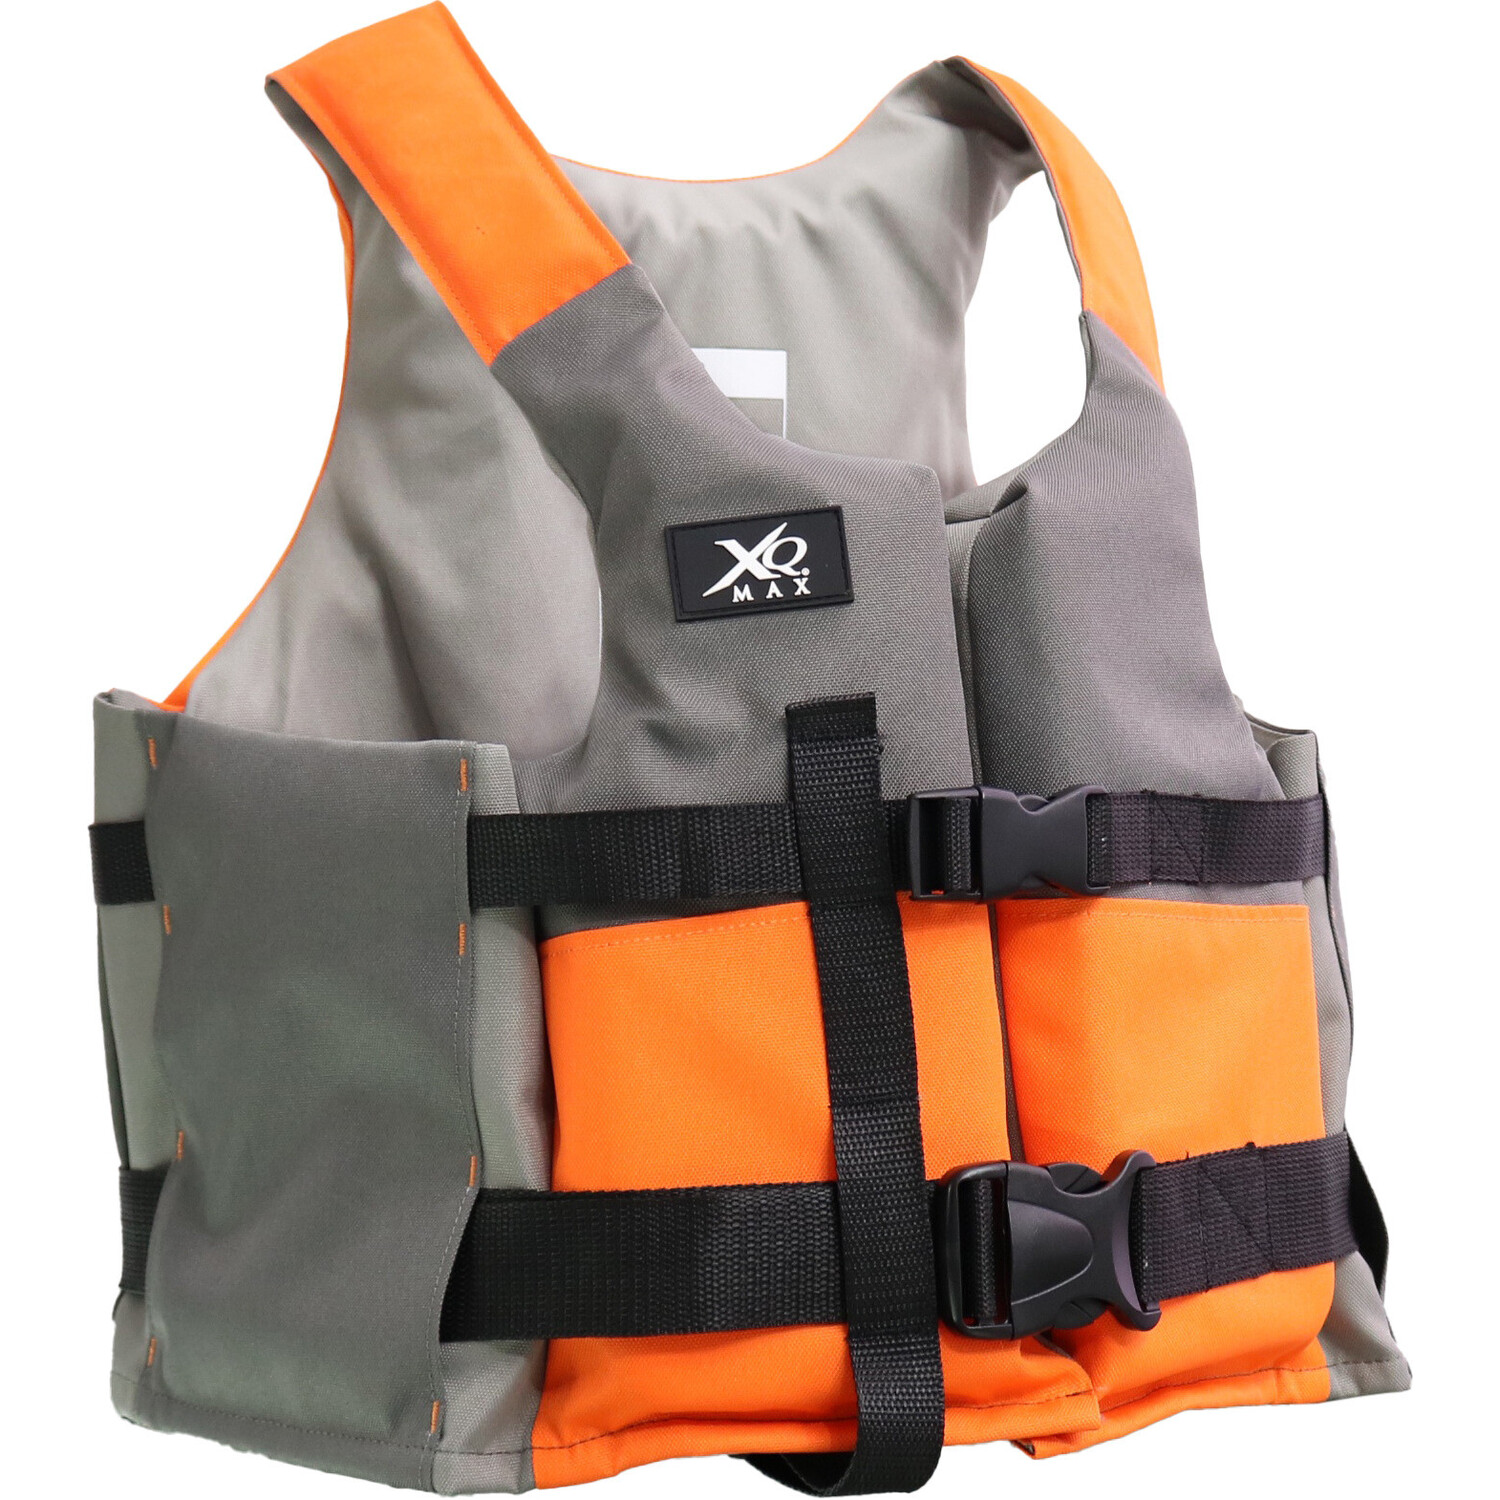 XQMAX Buoyancy Aid - Grey / X-Large Image